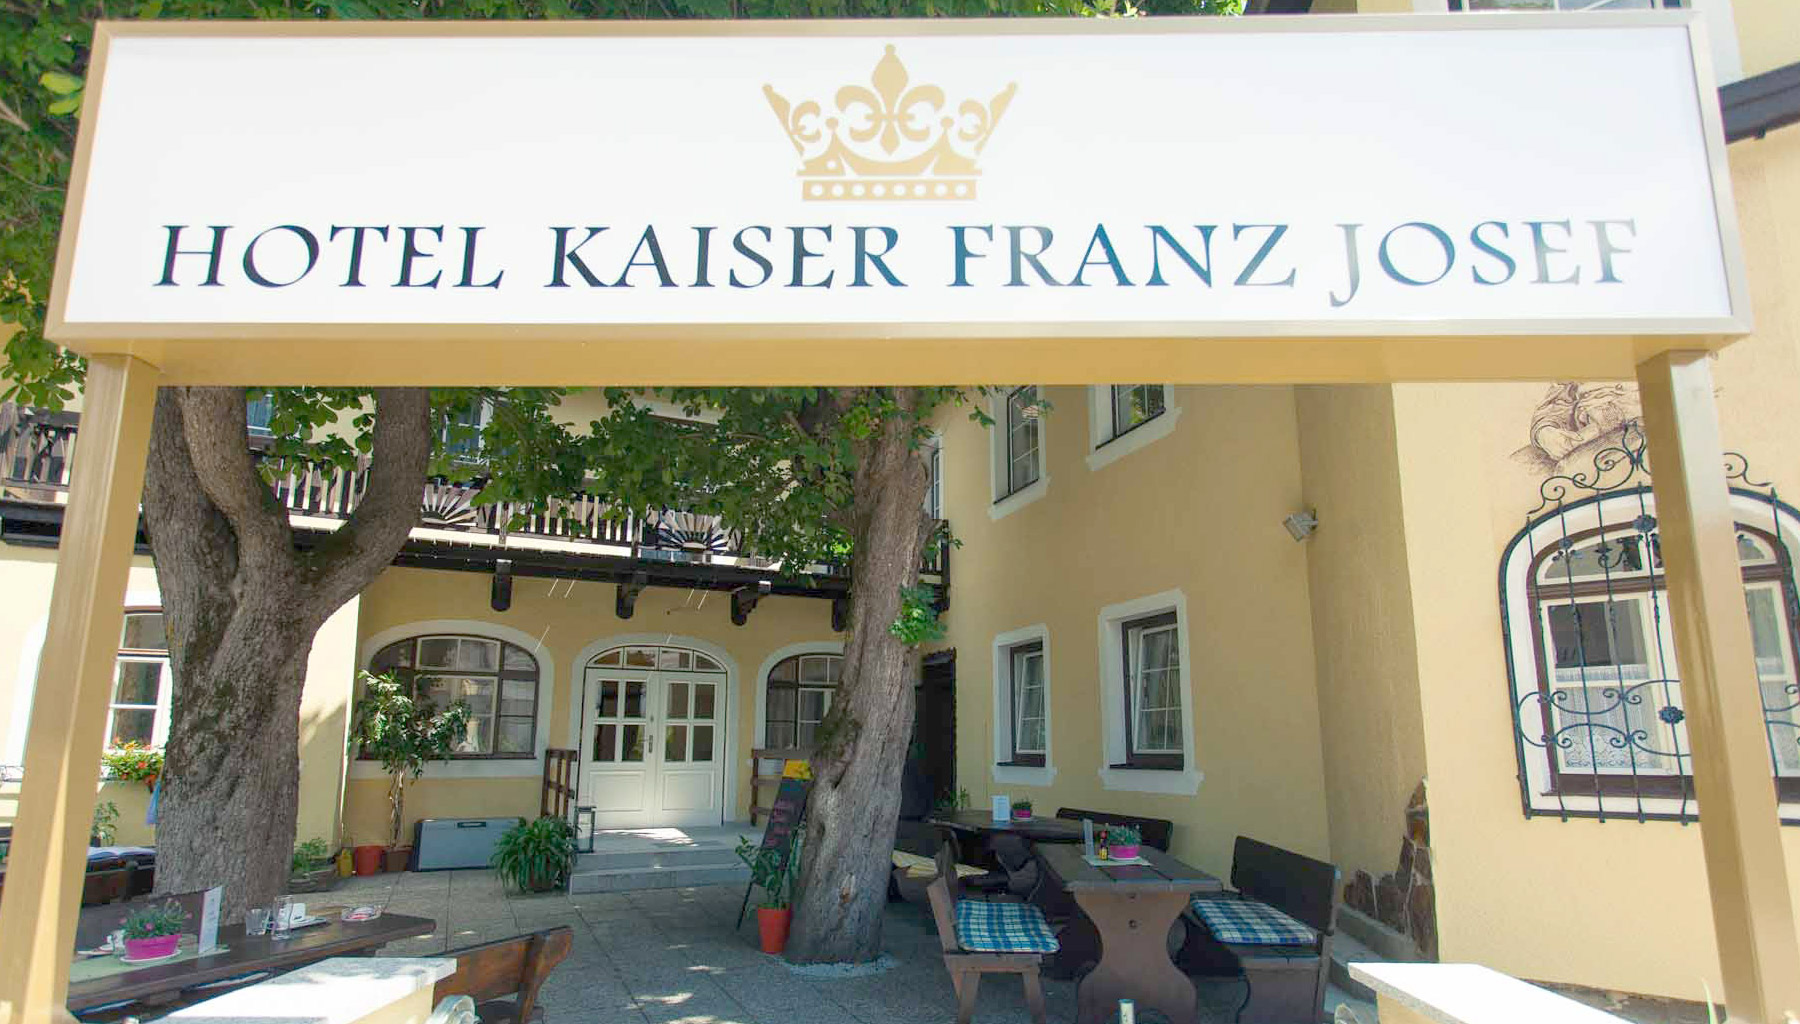 Entrance to the guest garden at Hotel Kaiser Franz Josef.